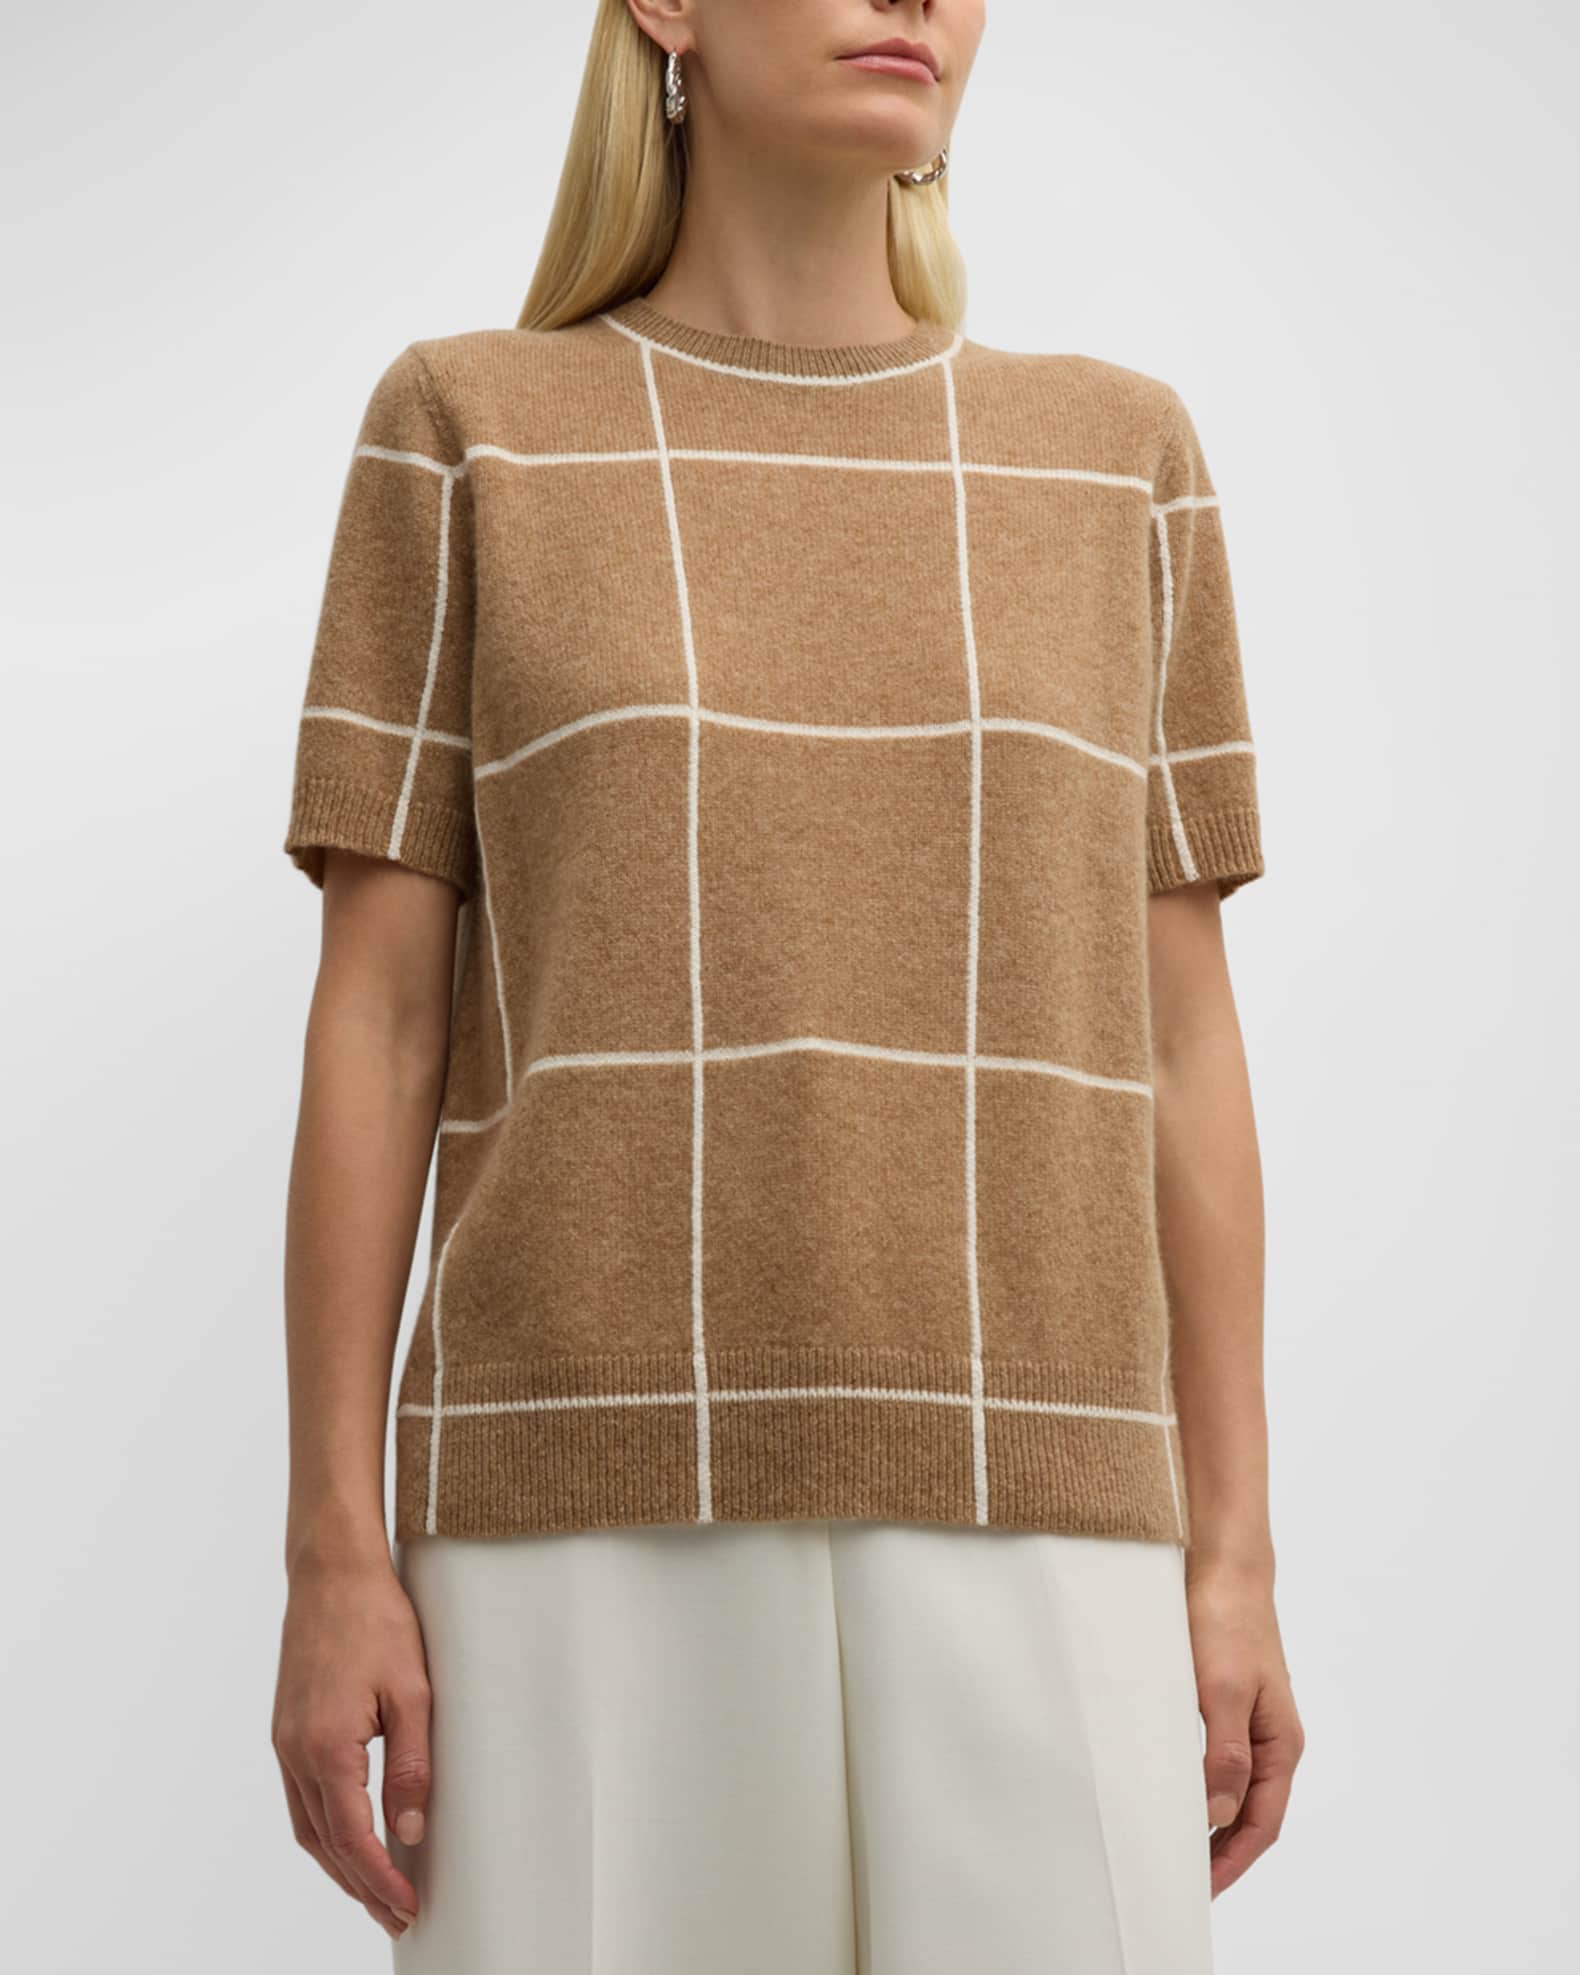 Monogram Tile Jacquard Cropped Cardigan - Women - Ready-to-Wear